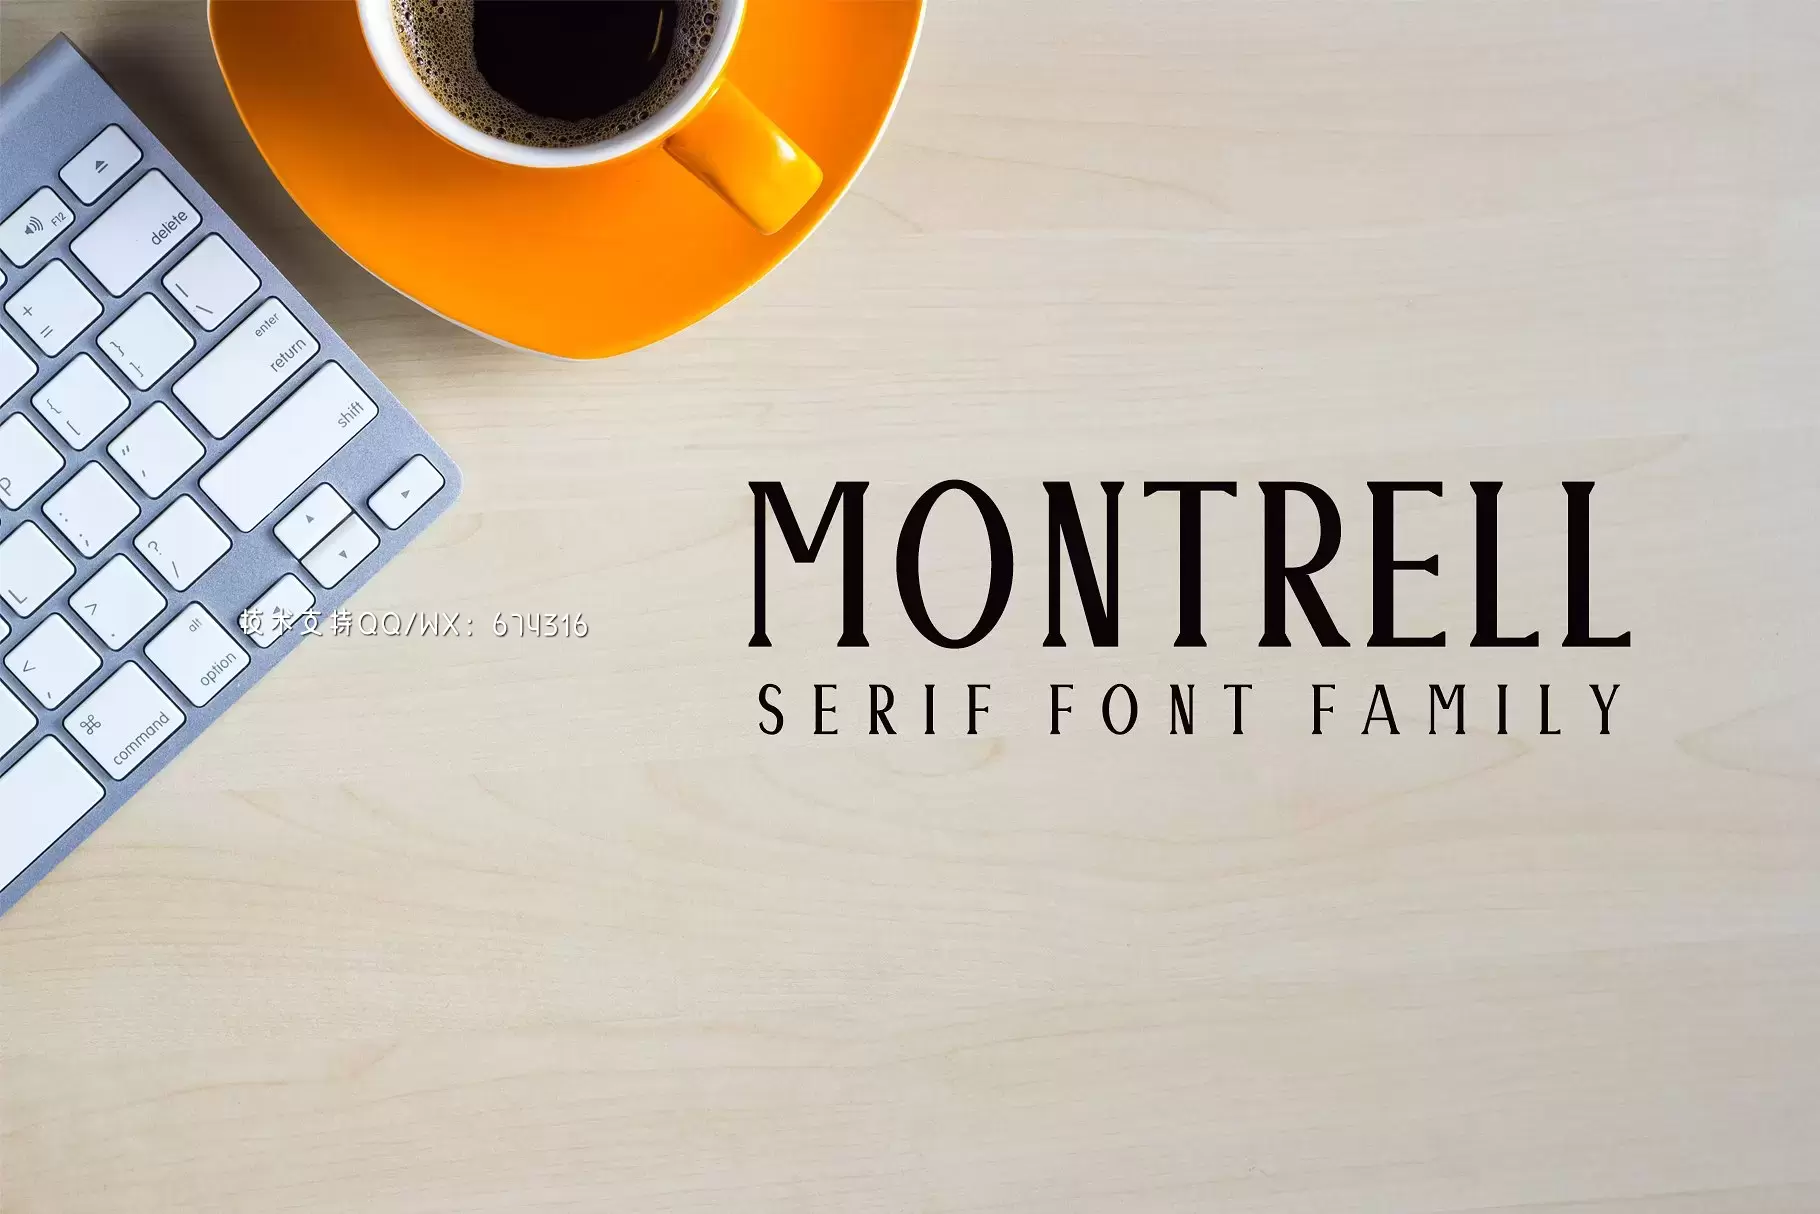 复古设计字体 Montrell Serif 5 Font Family Pack插图